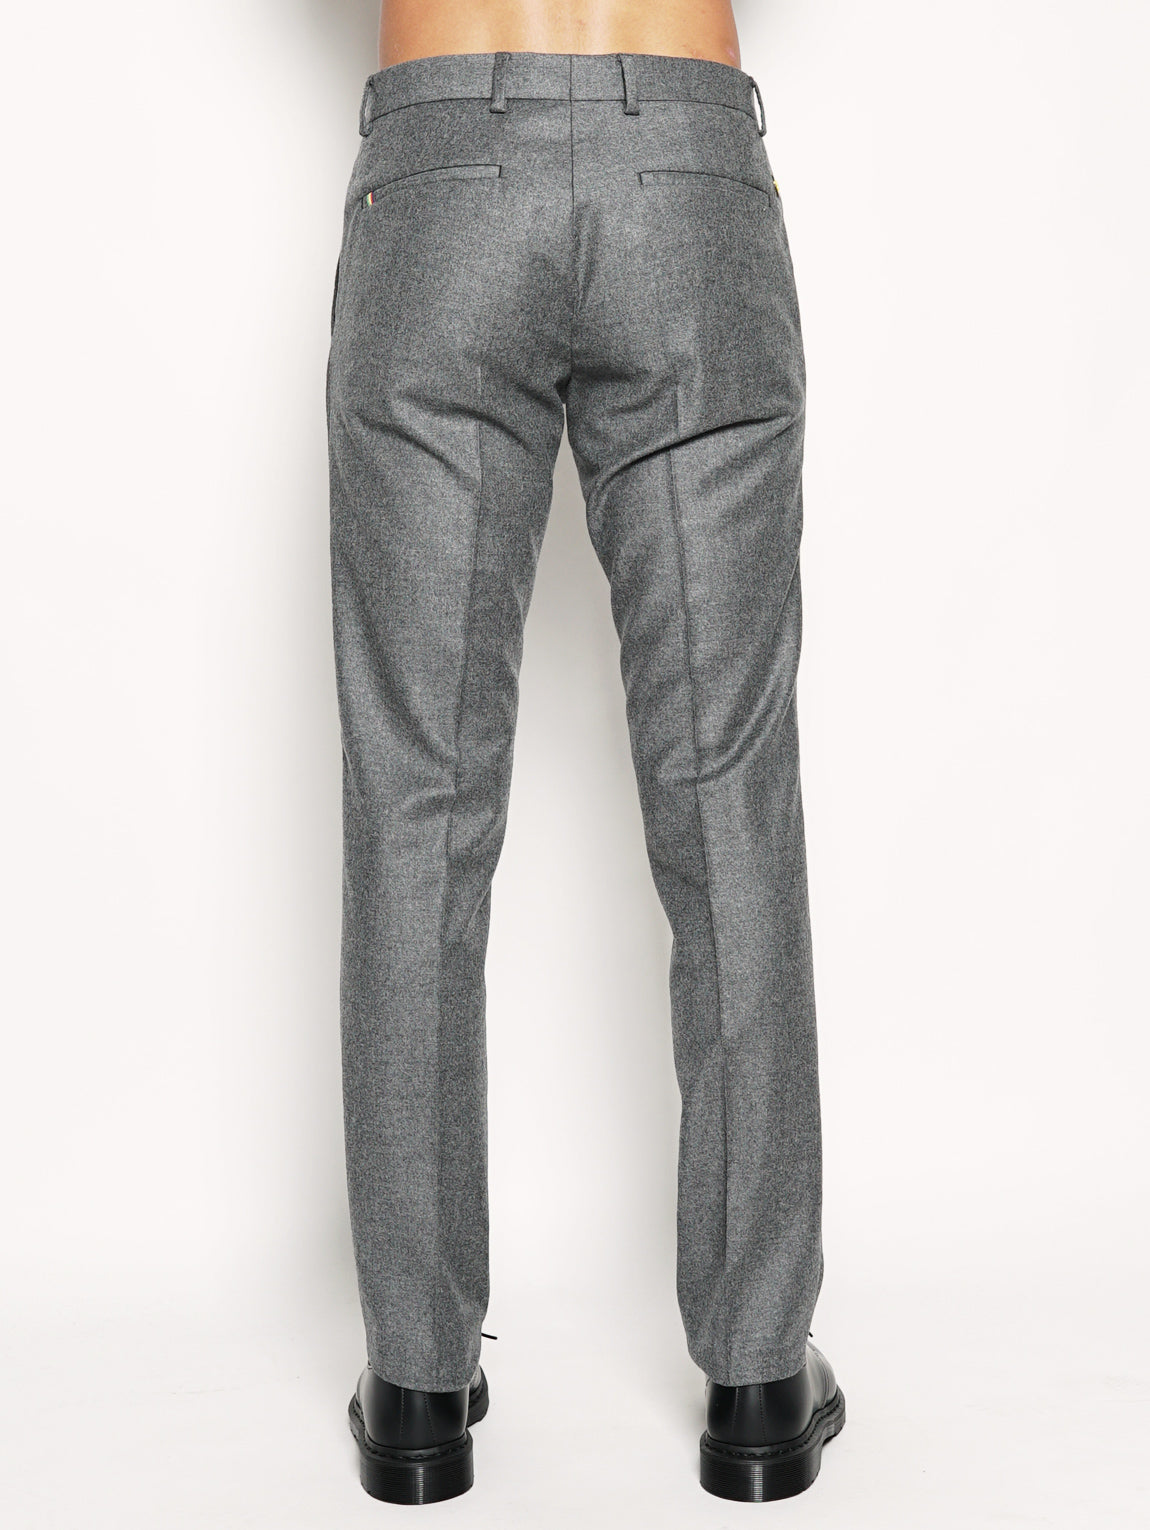 Pantalone elegante in lana Grigio-Pantaloni-MANUEL RITZ-TRYME Shop